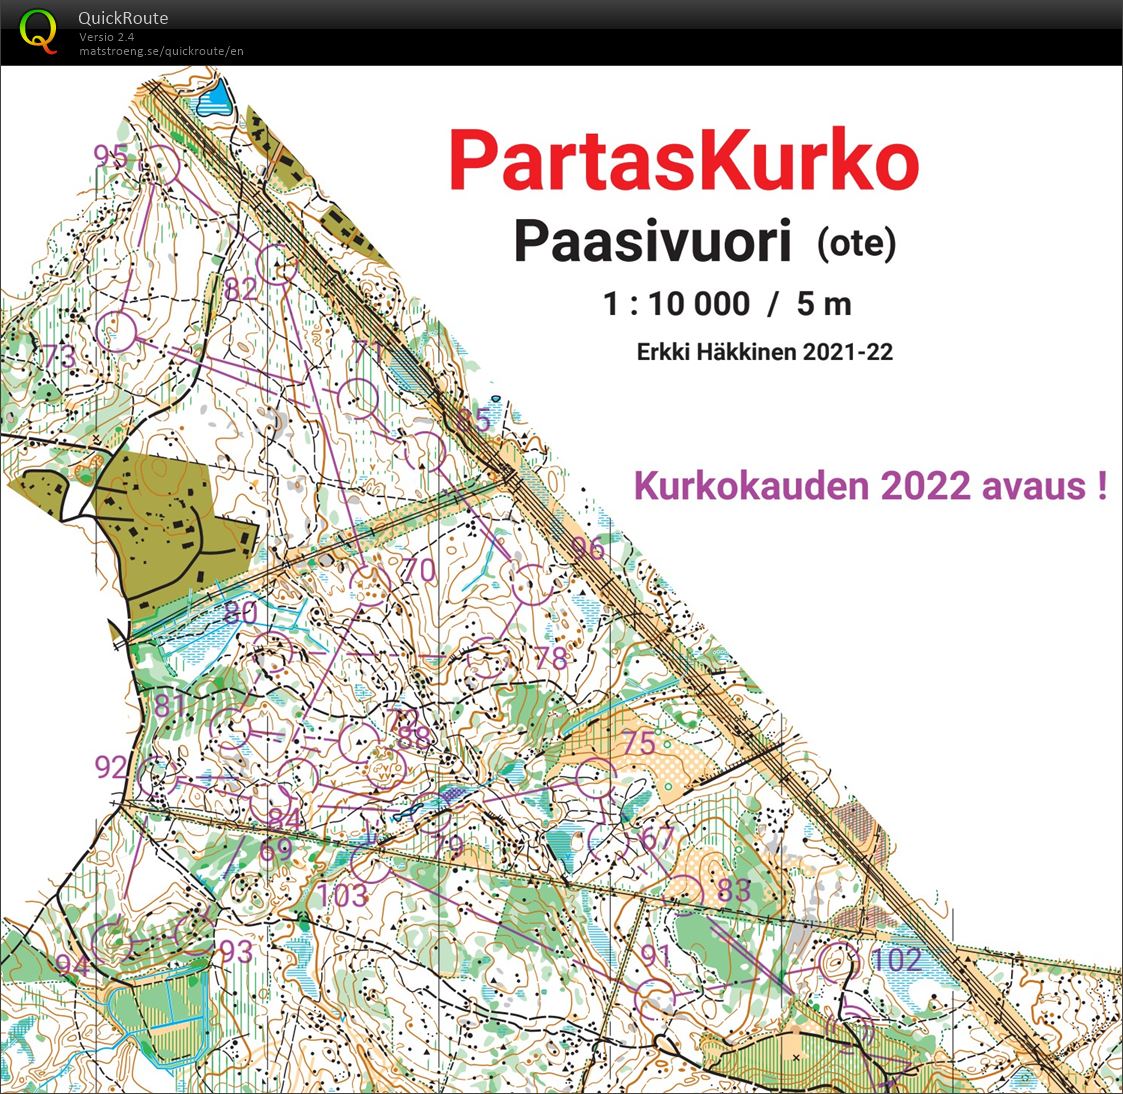 PartasKurko (29/09/2022)